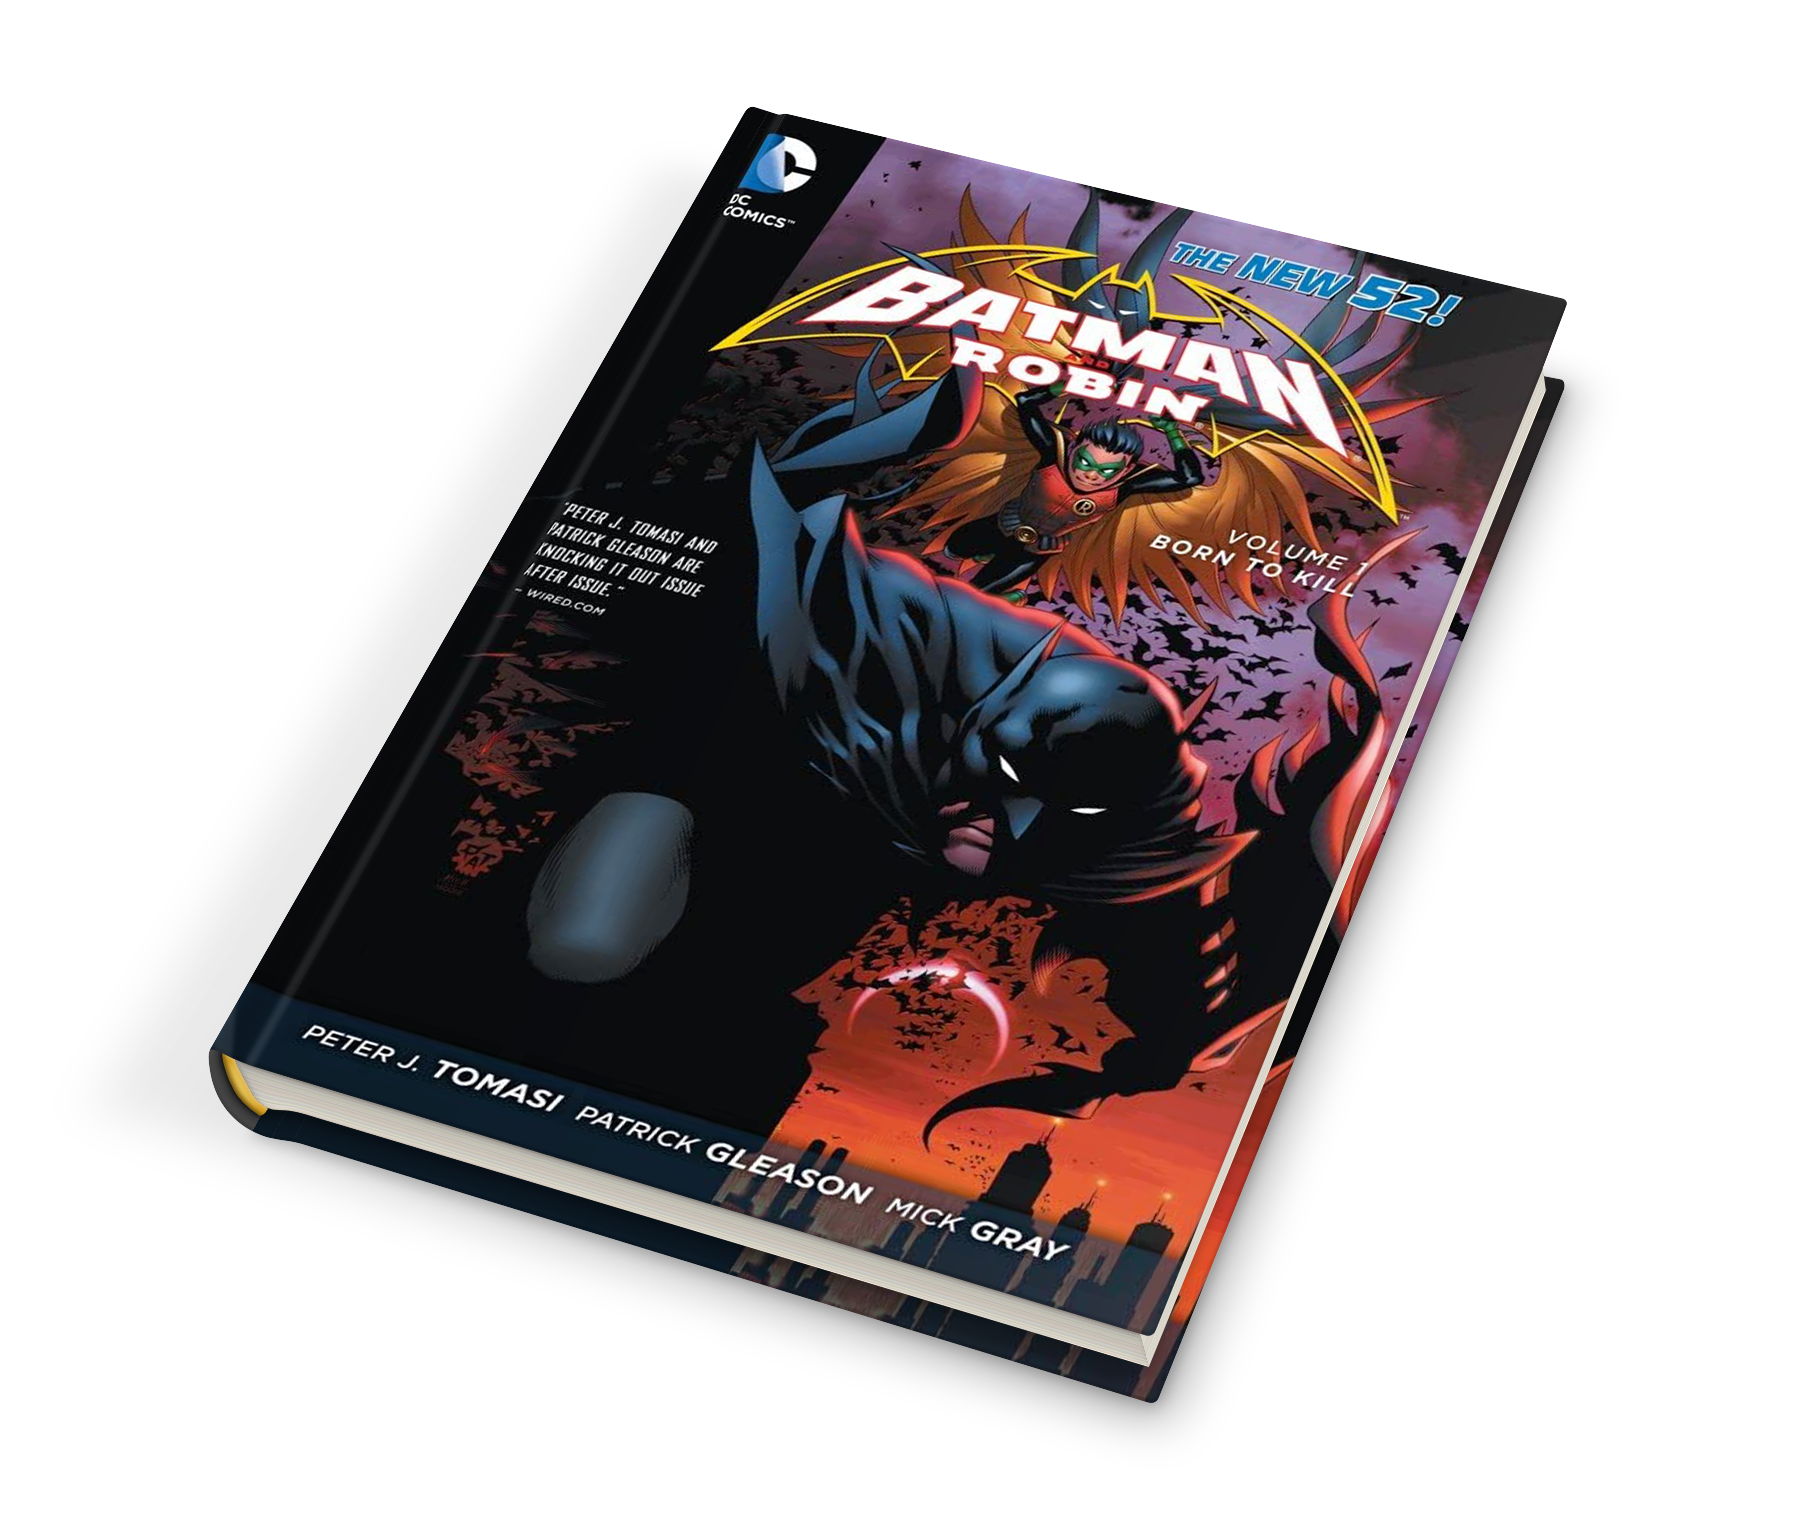 Batman and Robin, Volume 1: Born to Kill by Peter J. Tomasi